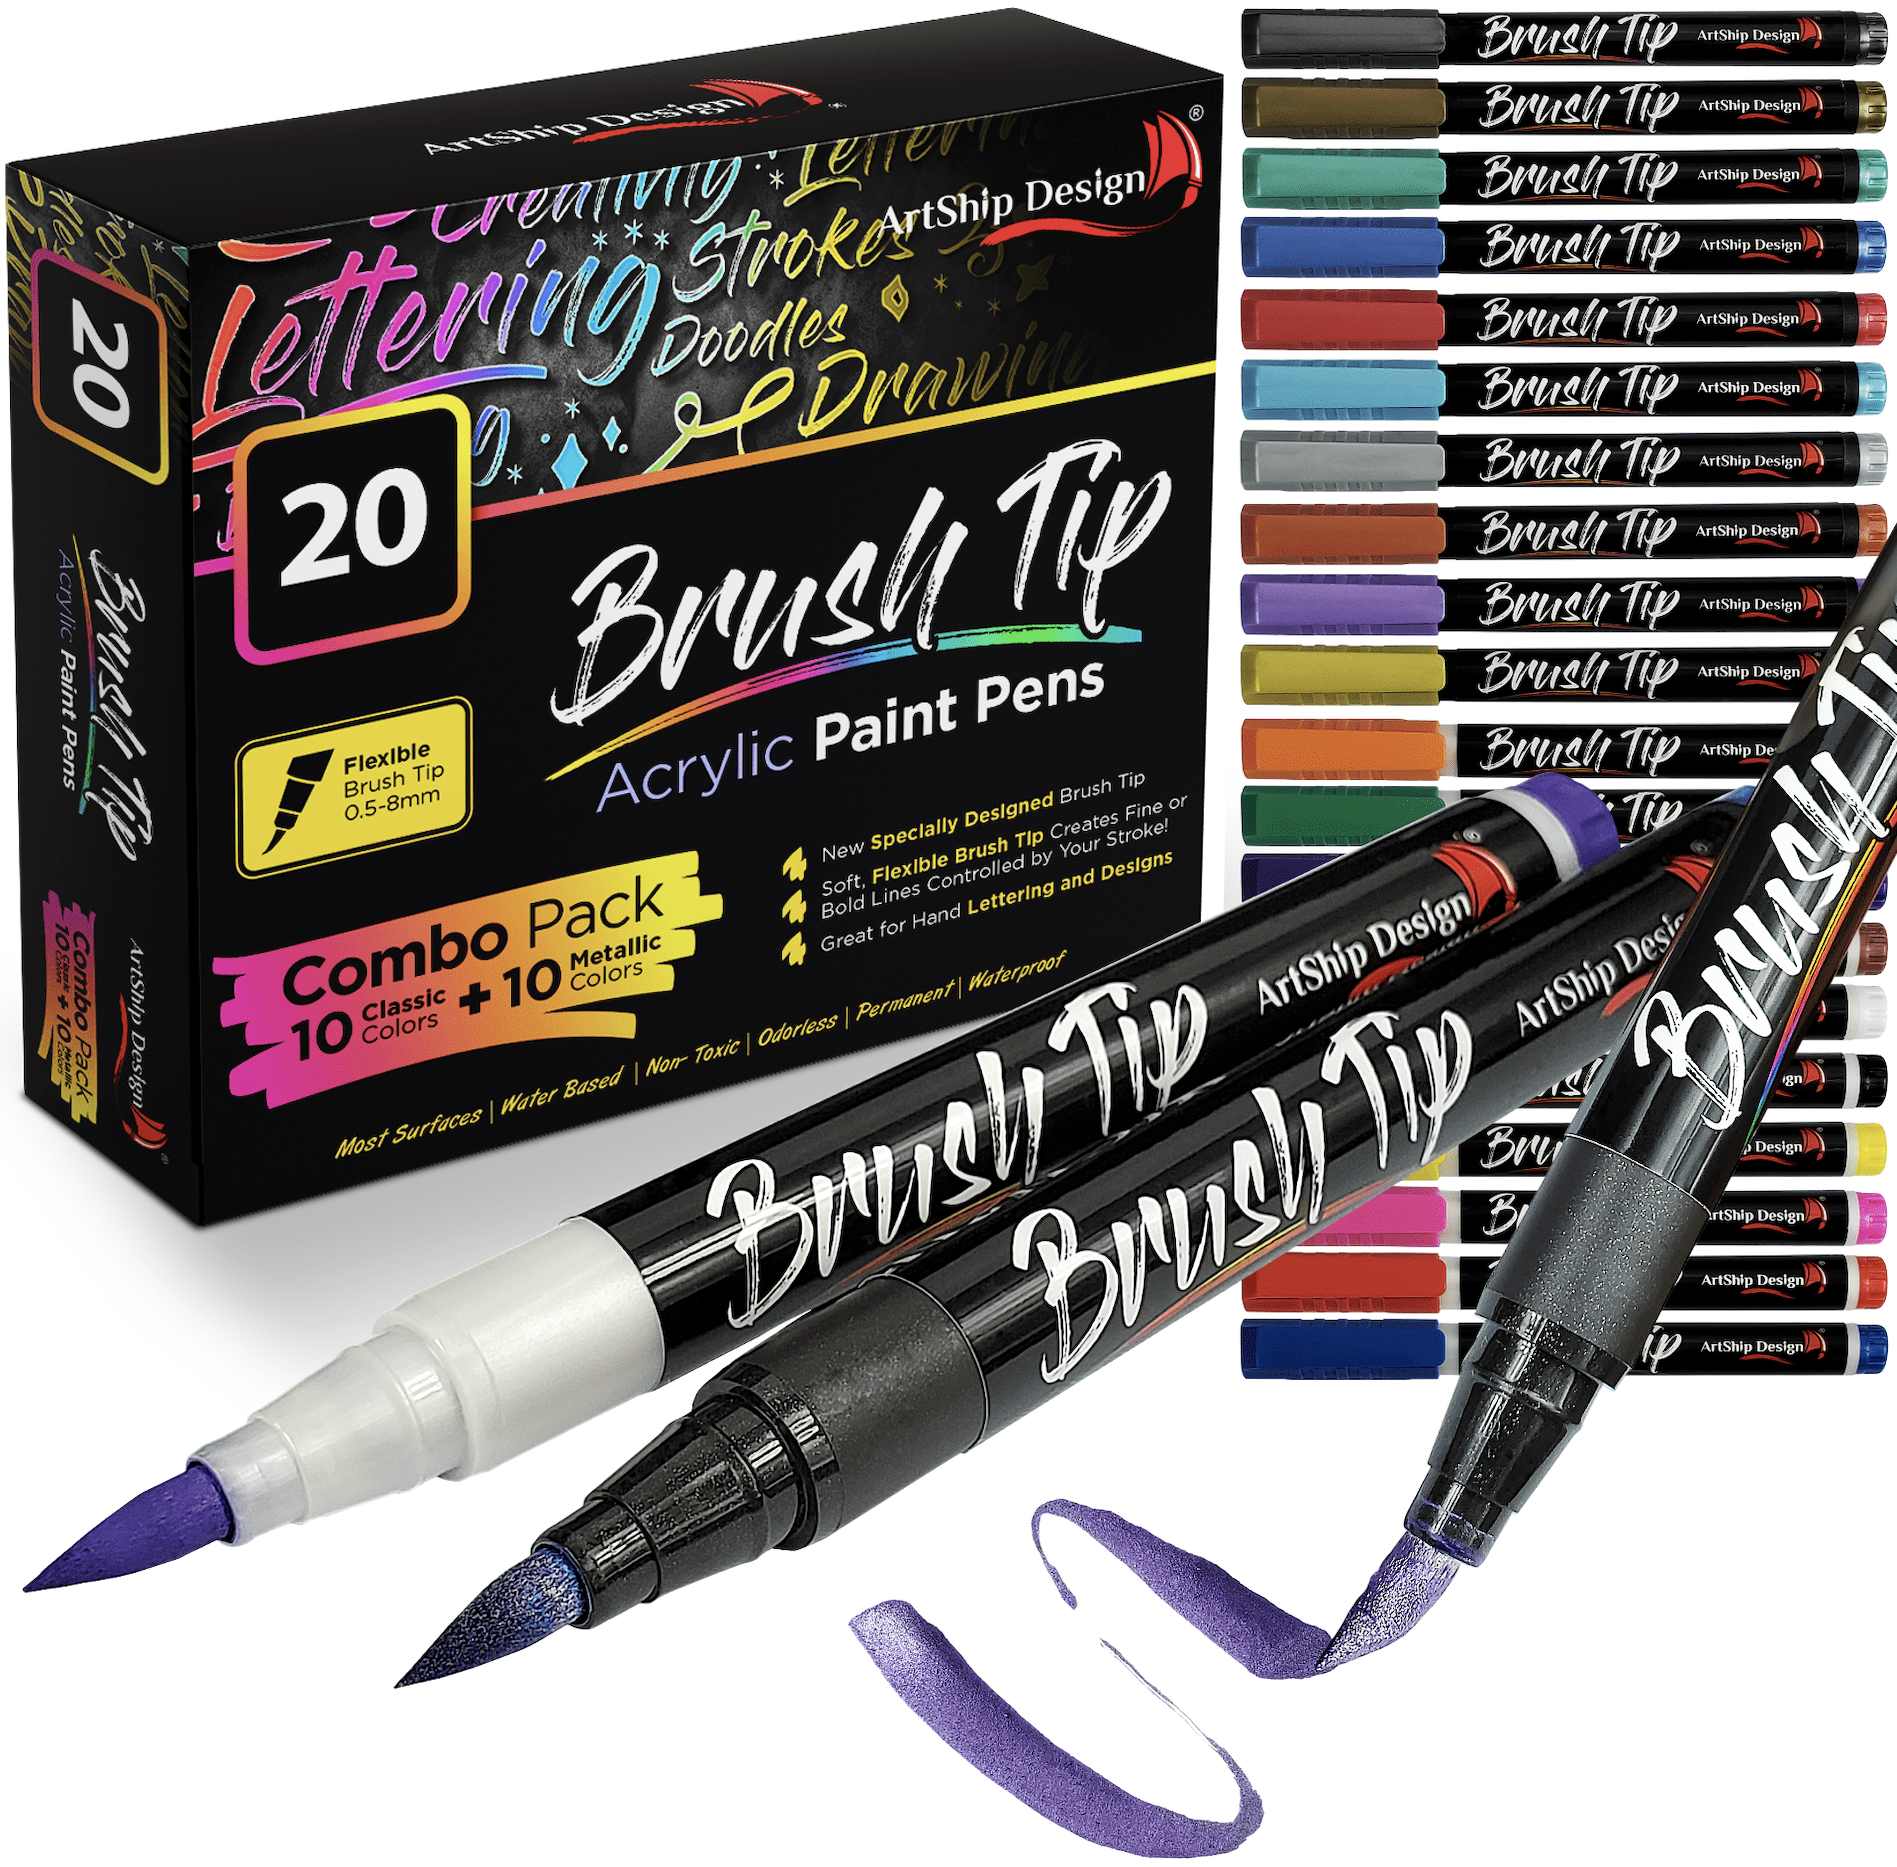 Acrylic Paint Pens (Set of 3) – ColorByFeliks